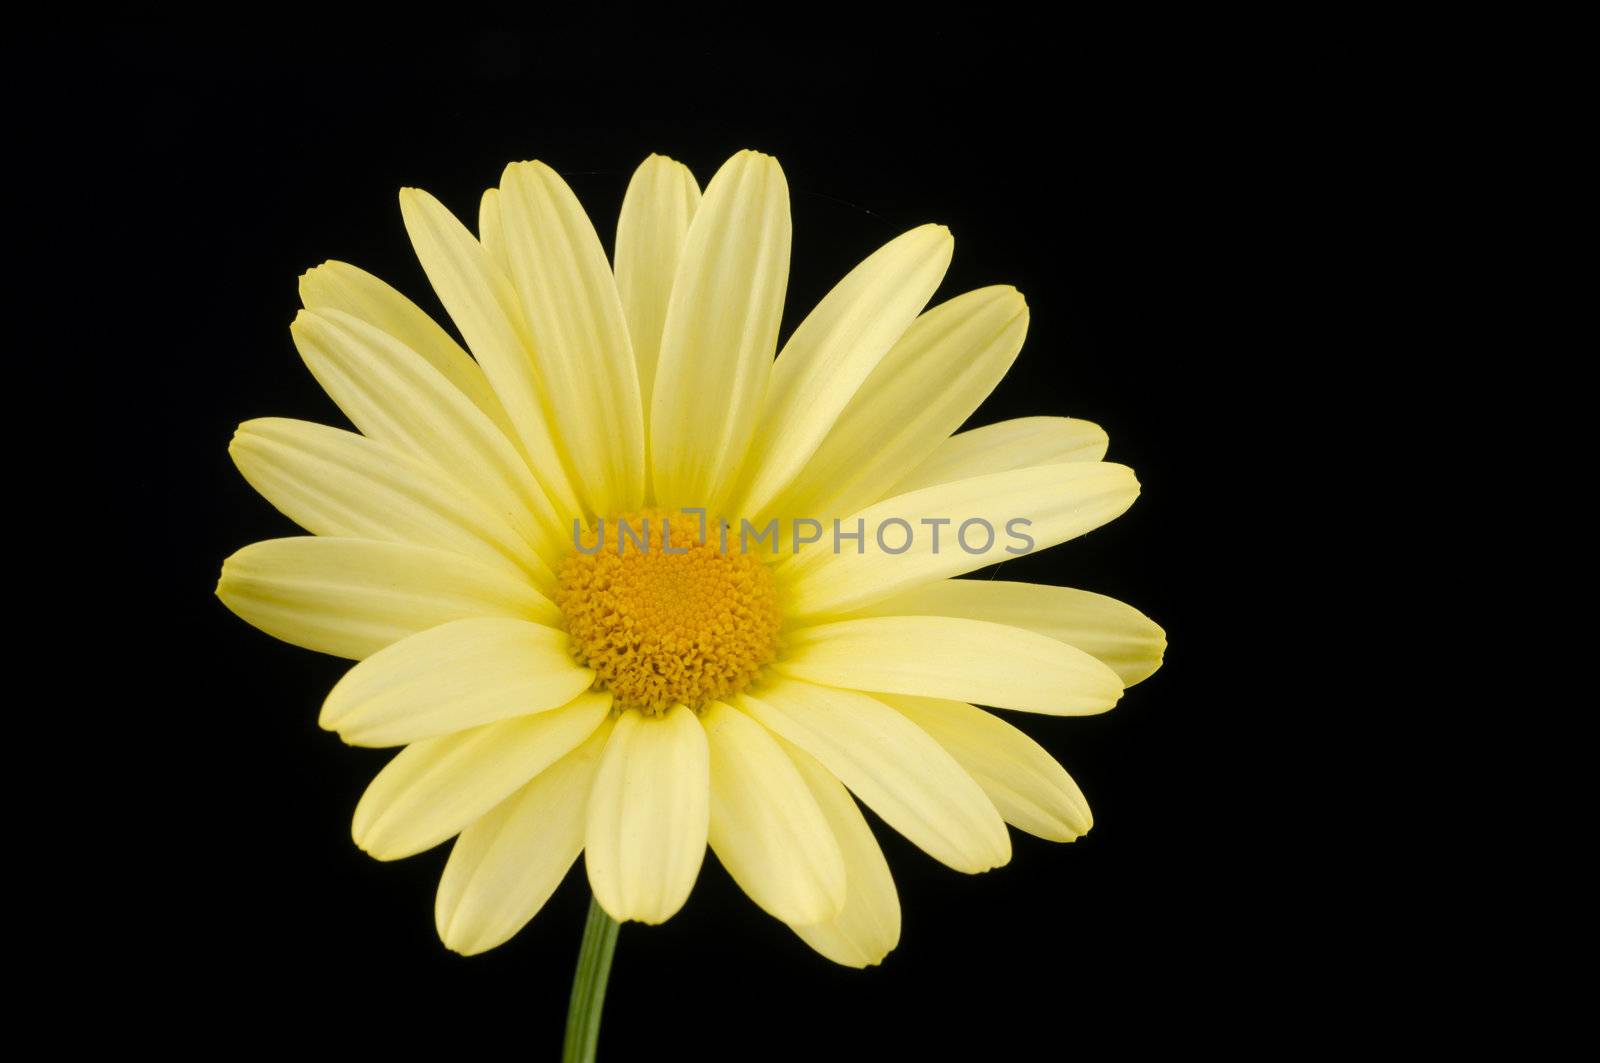 Yellow Daisy by Gordo25